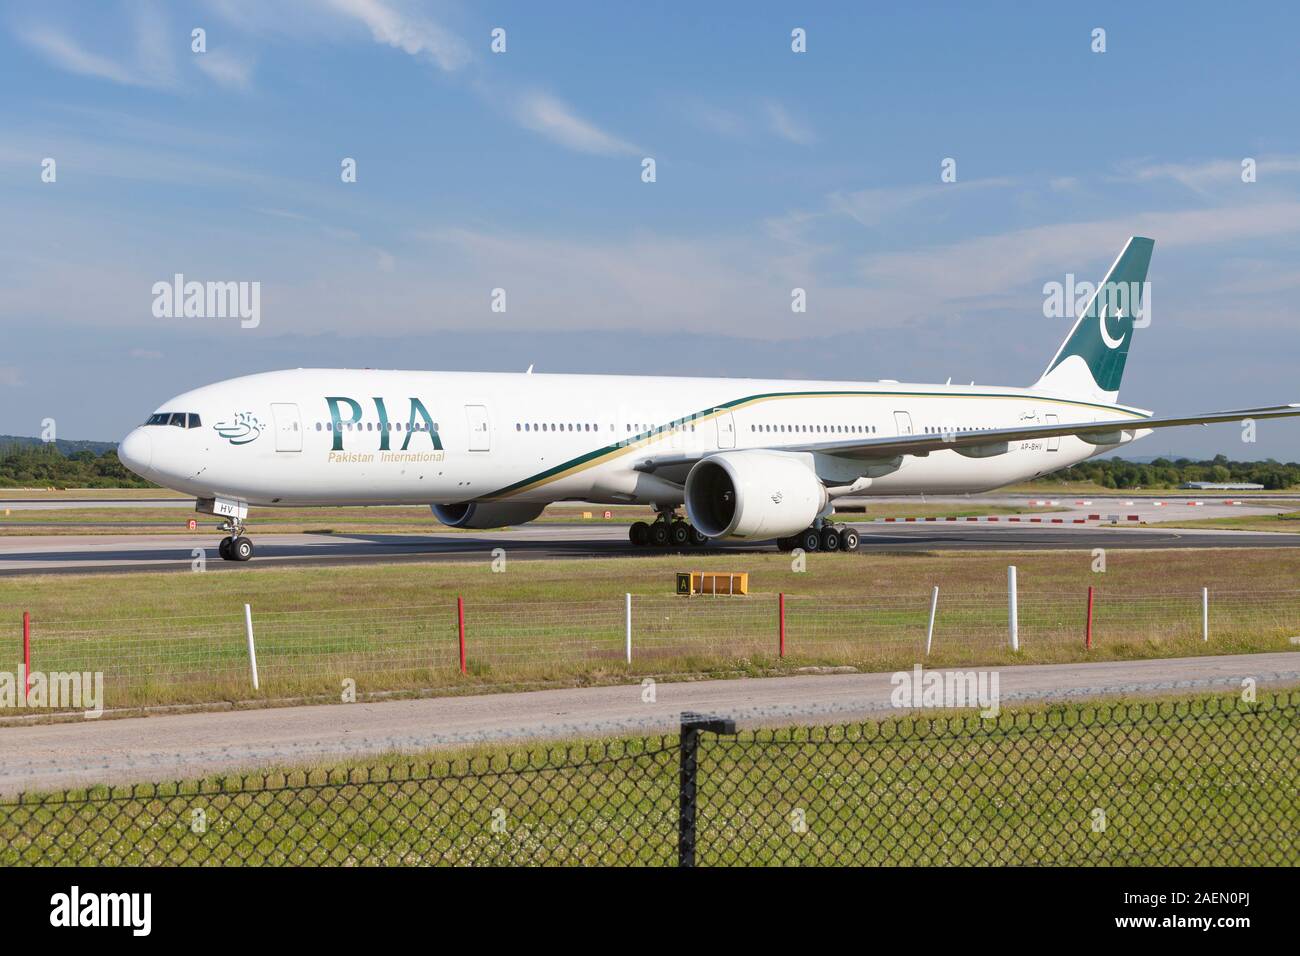 PIA Pakistan International Airlines aeromobili, Inghilterra Foto Stock